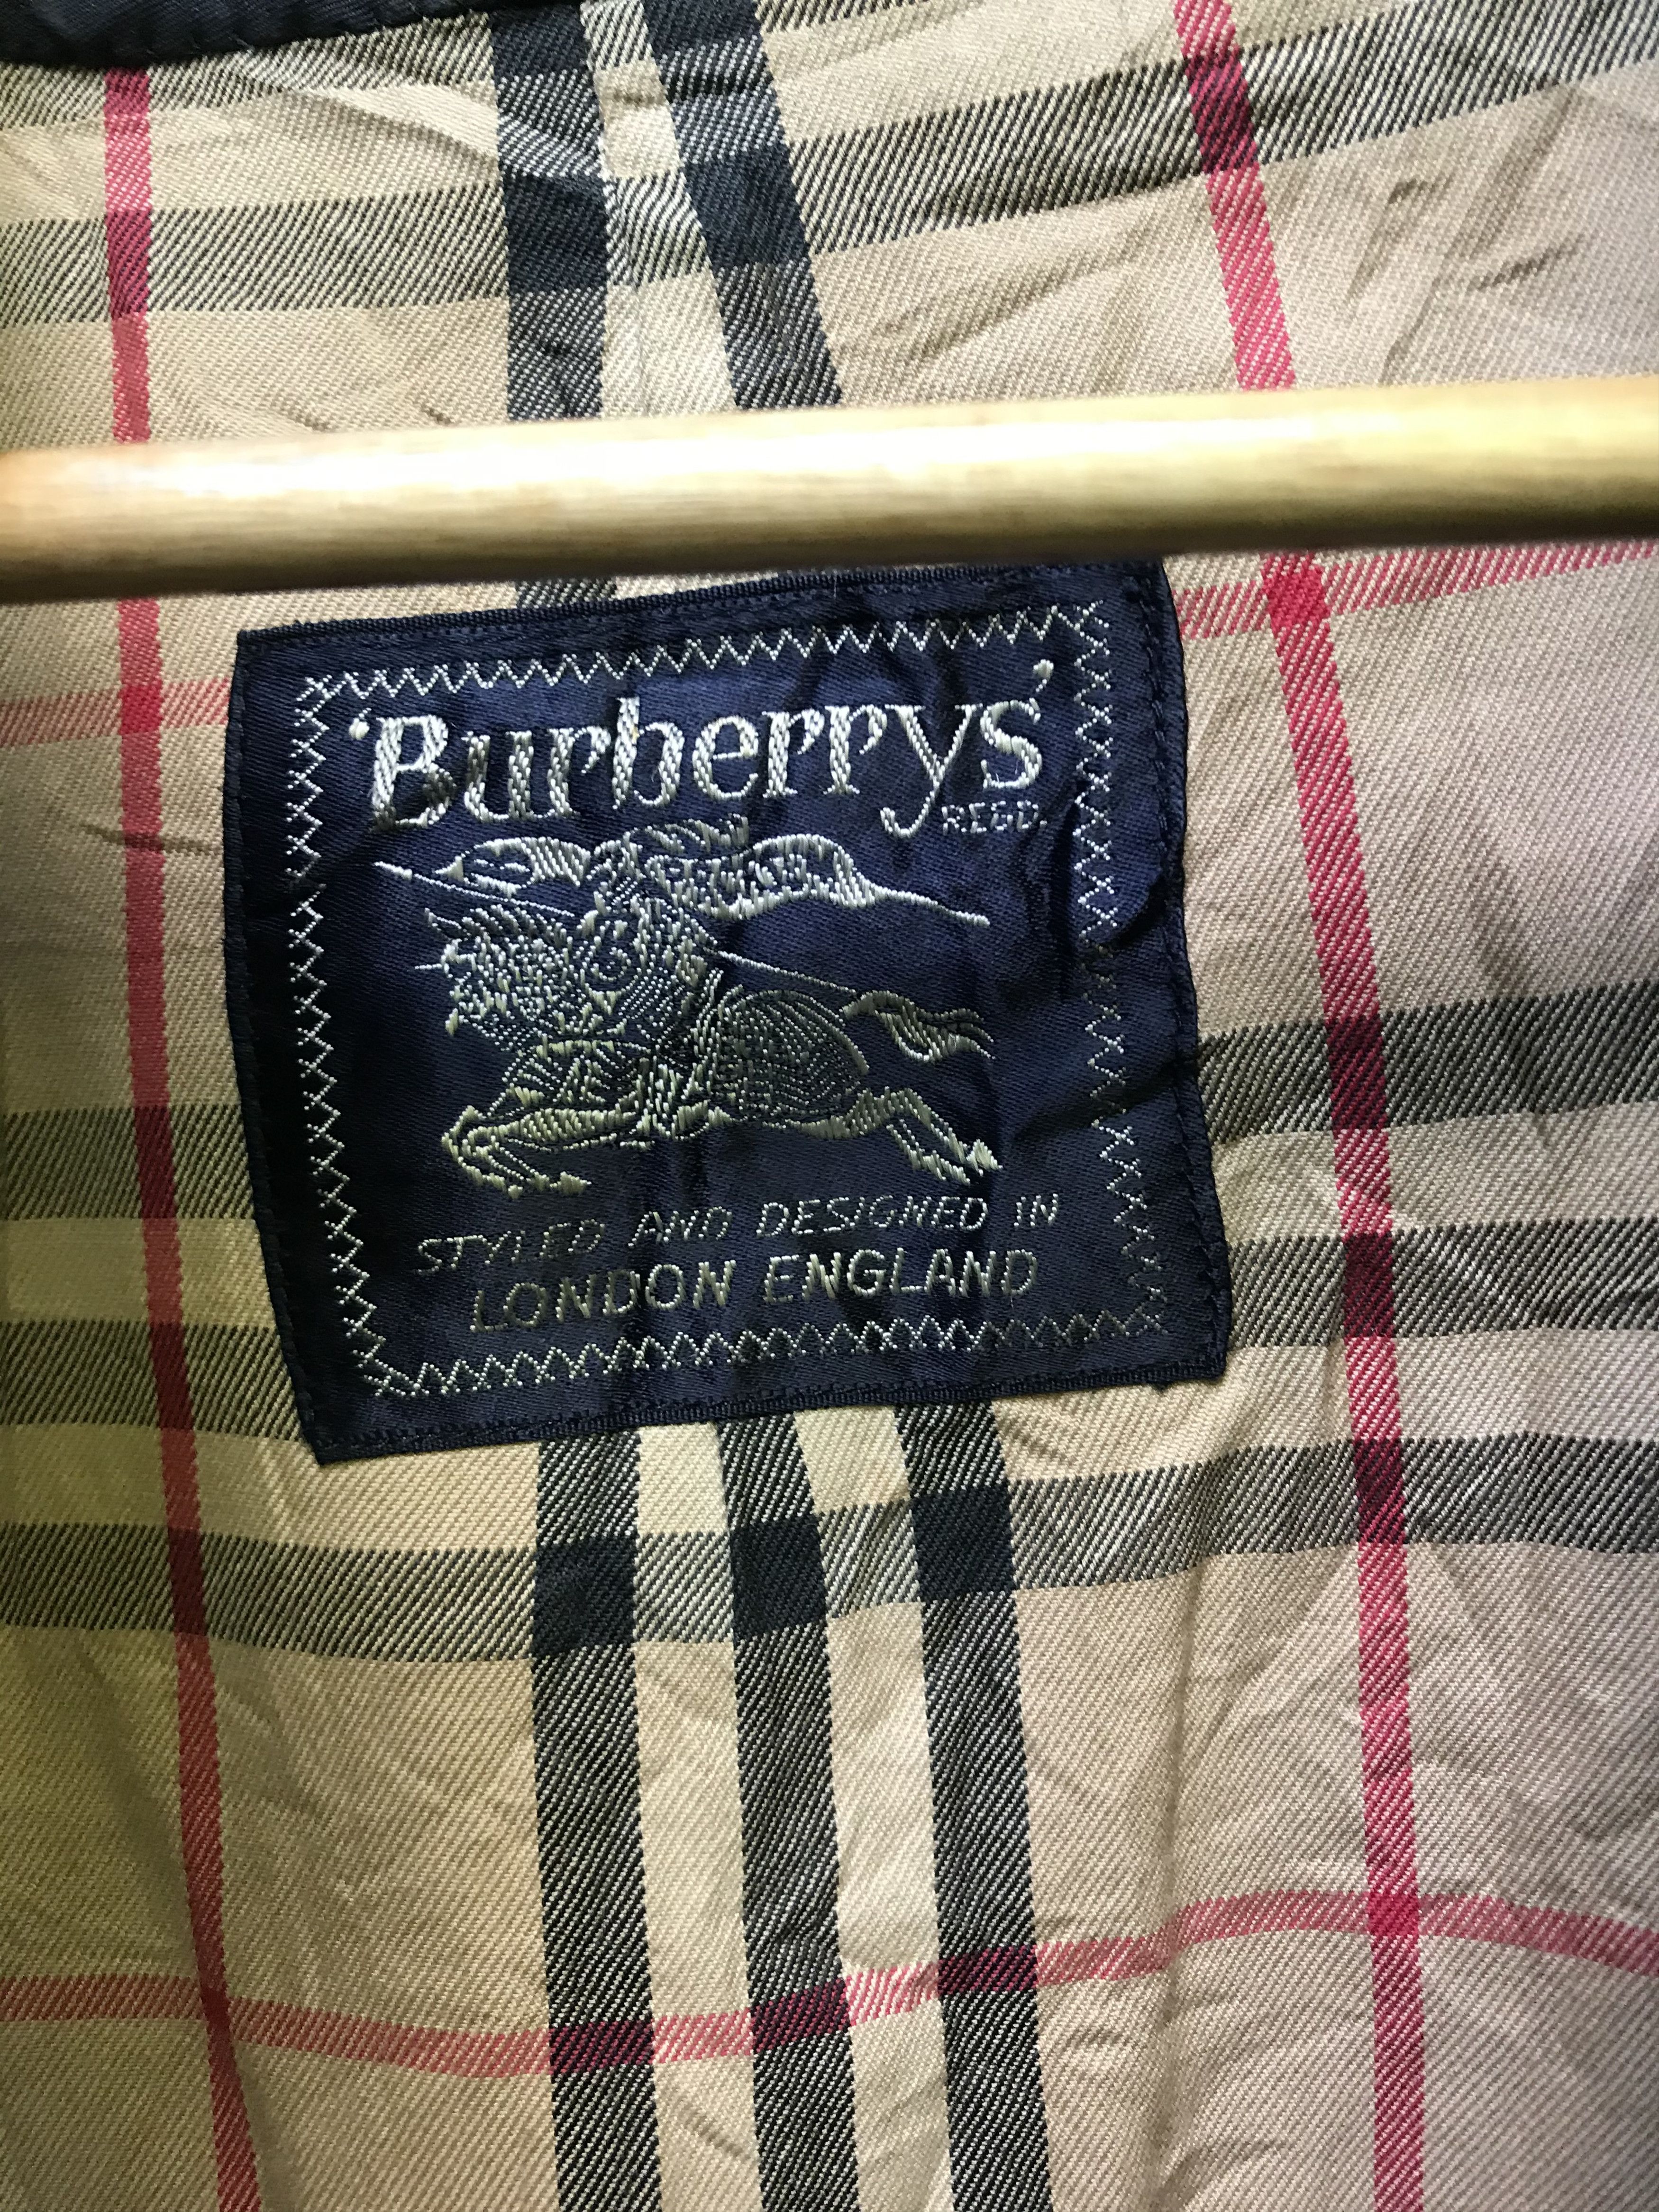 Vintage Burberry Trench Coat - 4